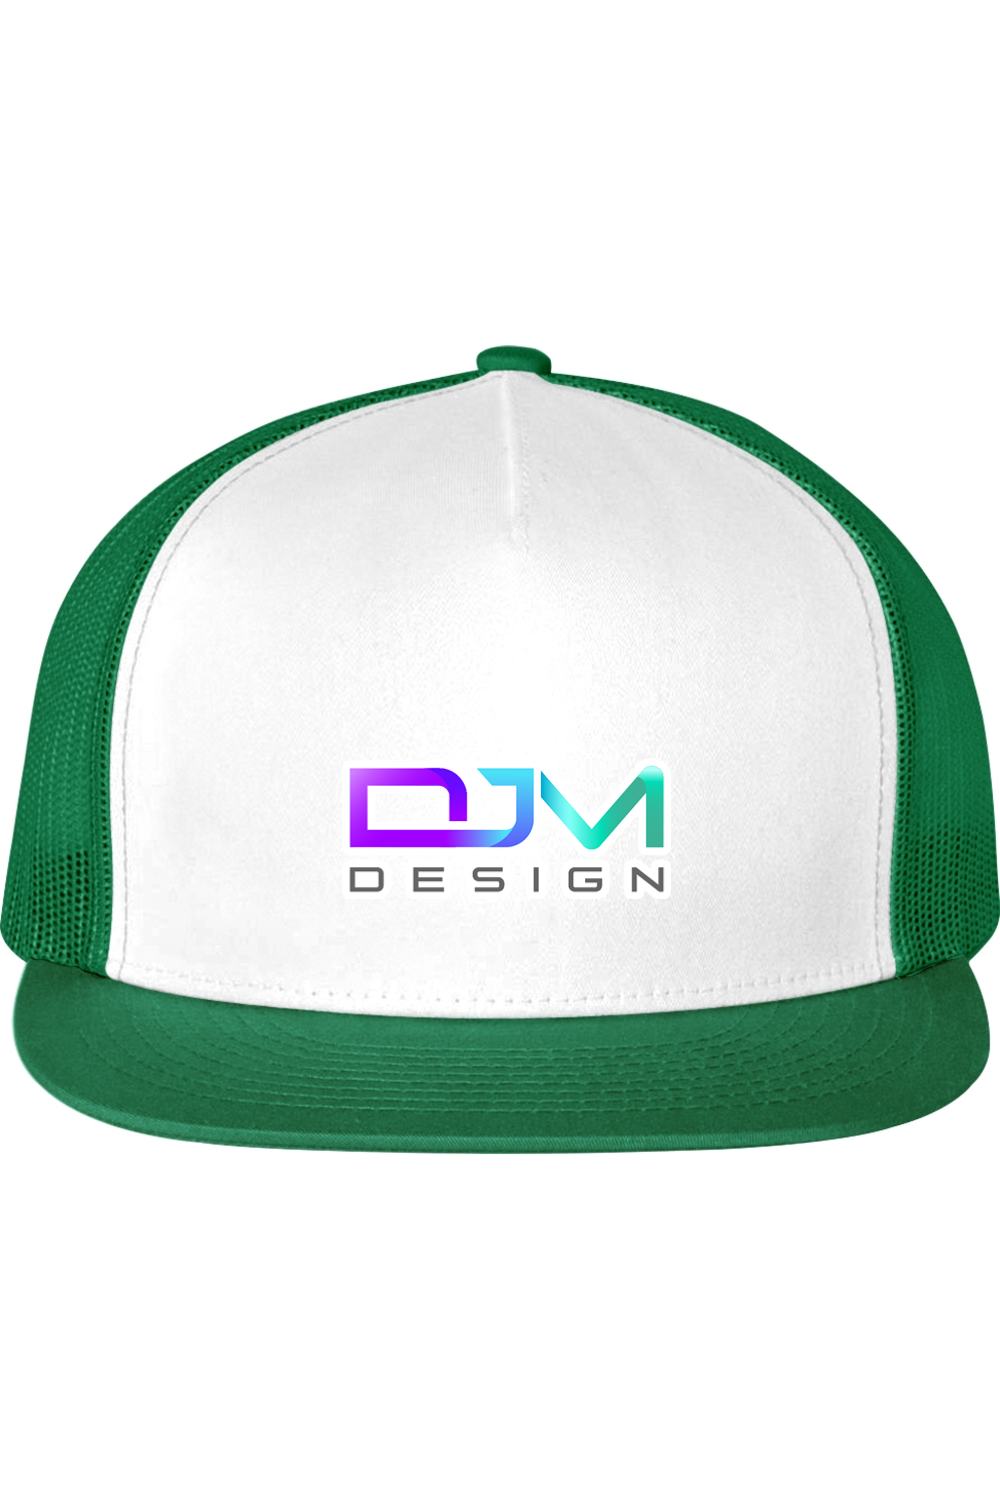 DJM.Design™ Flat Bill Trucker Cap (Ai Workshop 3K Leads Access) 390 Points